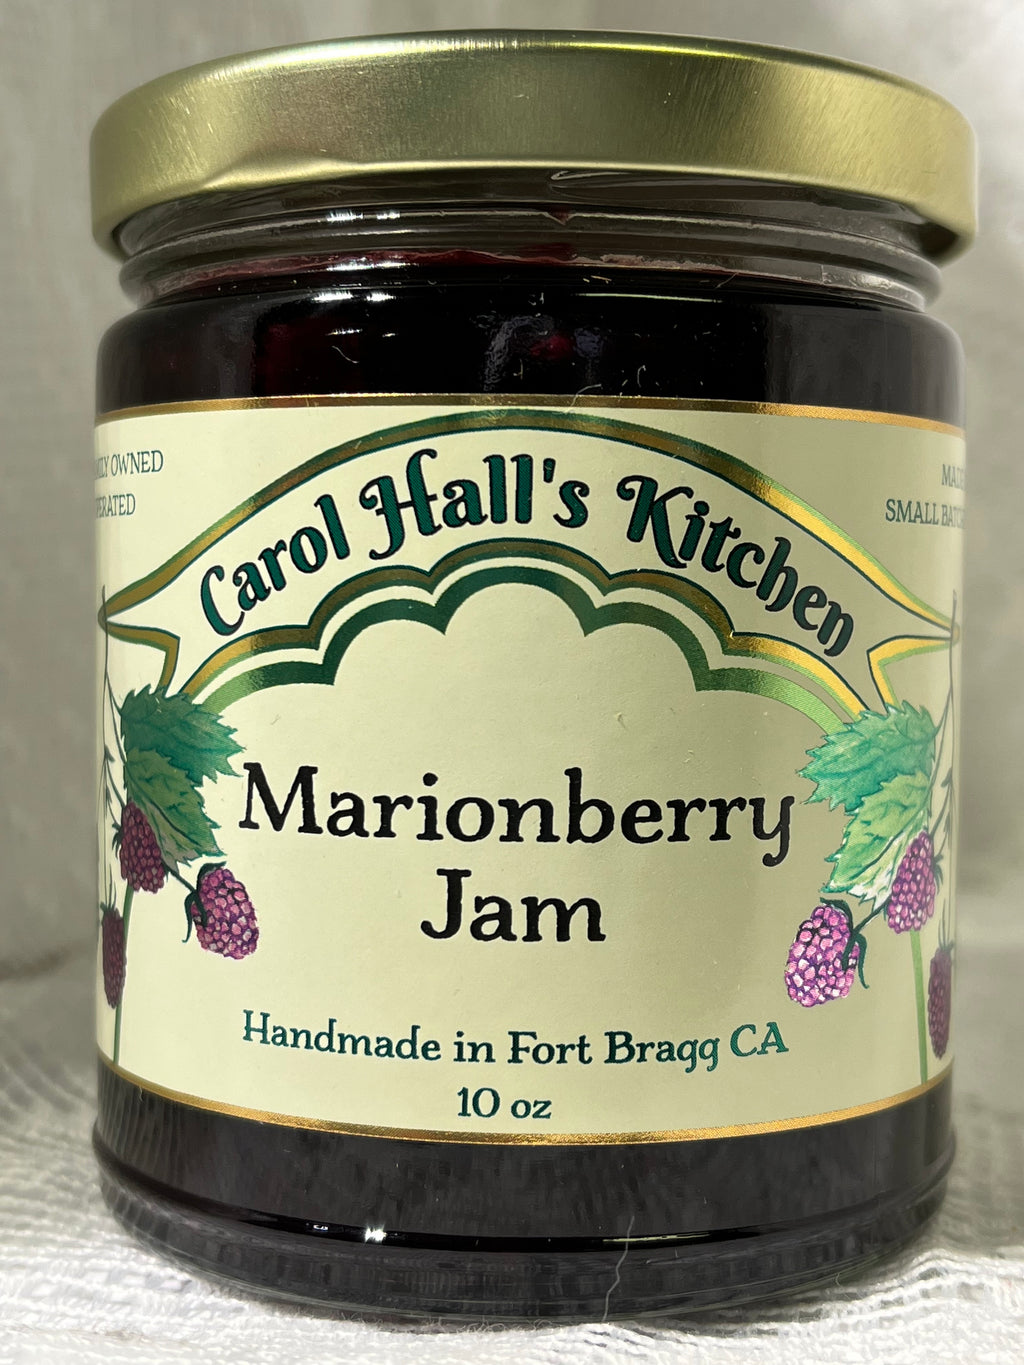 Marionberry Jam